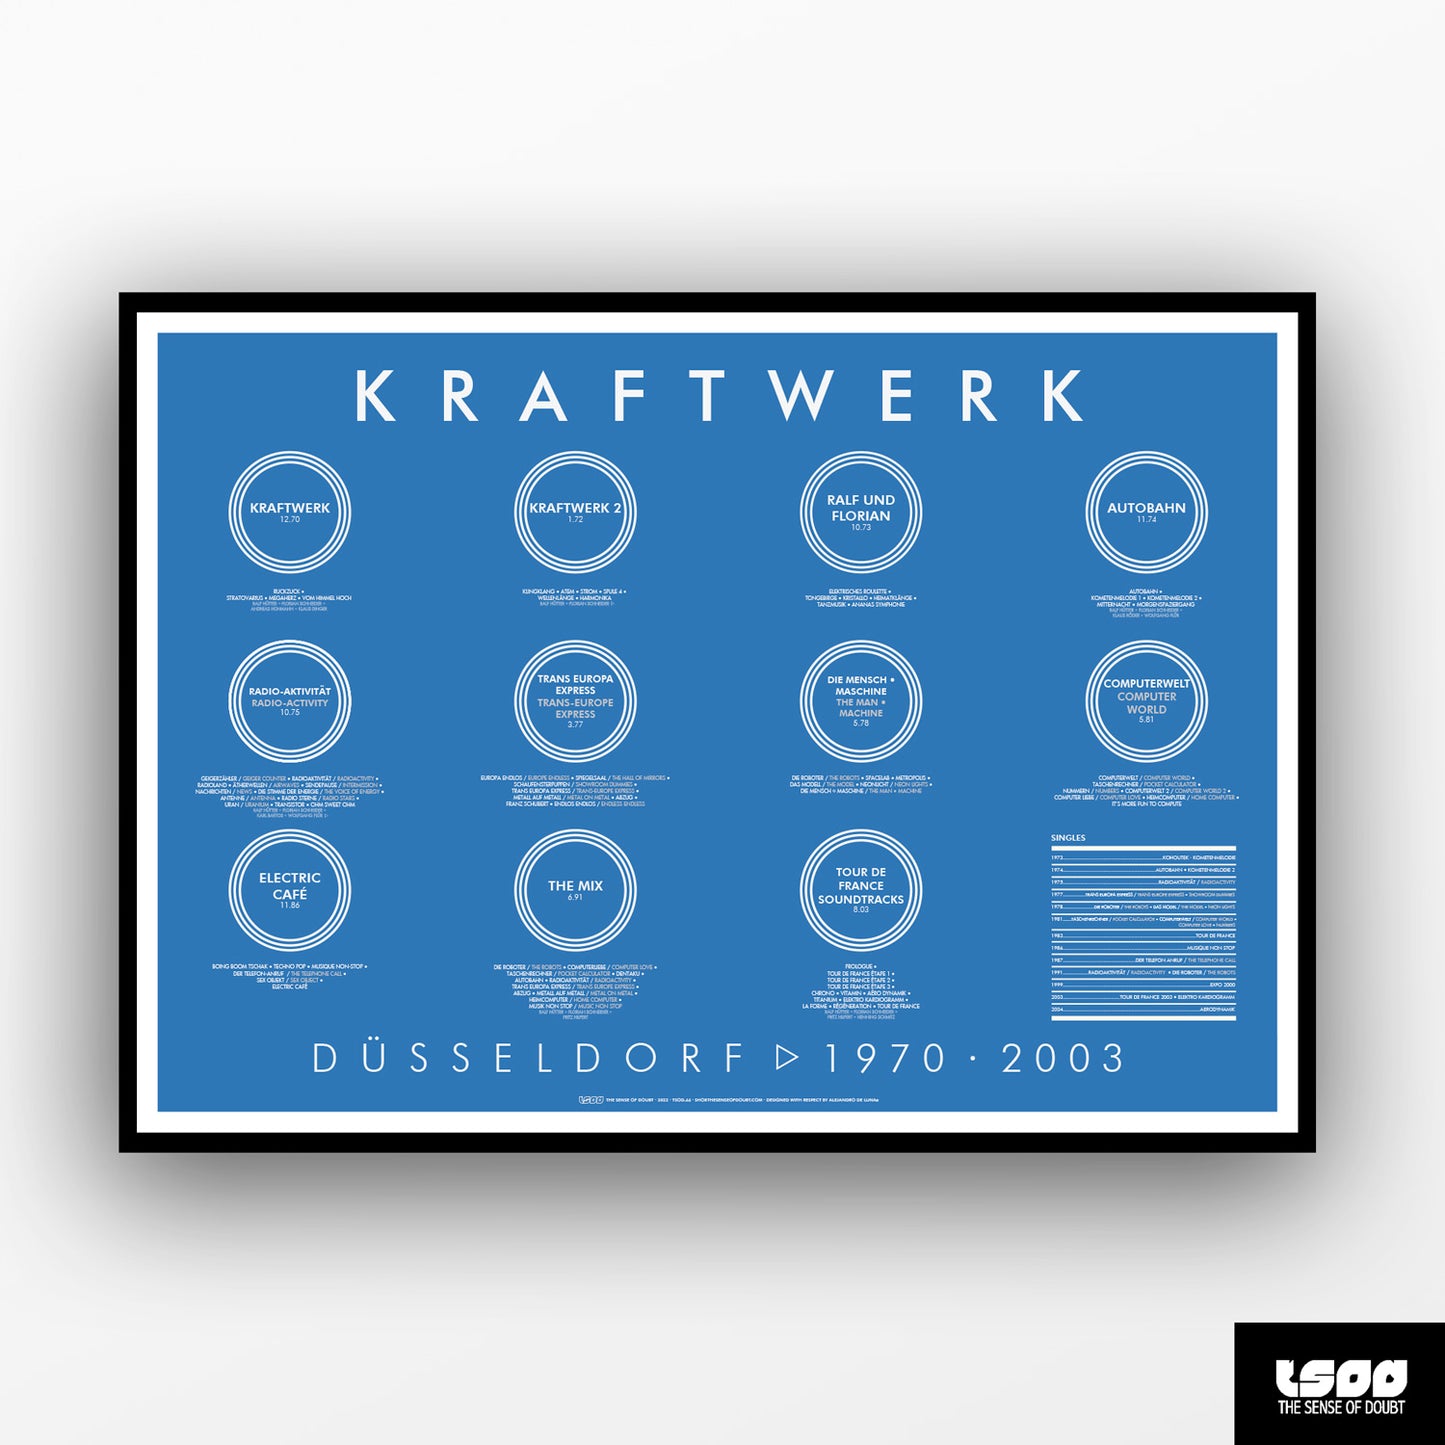 Kraftwerk - Discography (1970 - 2003)